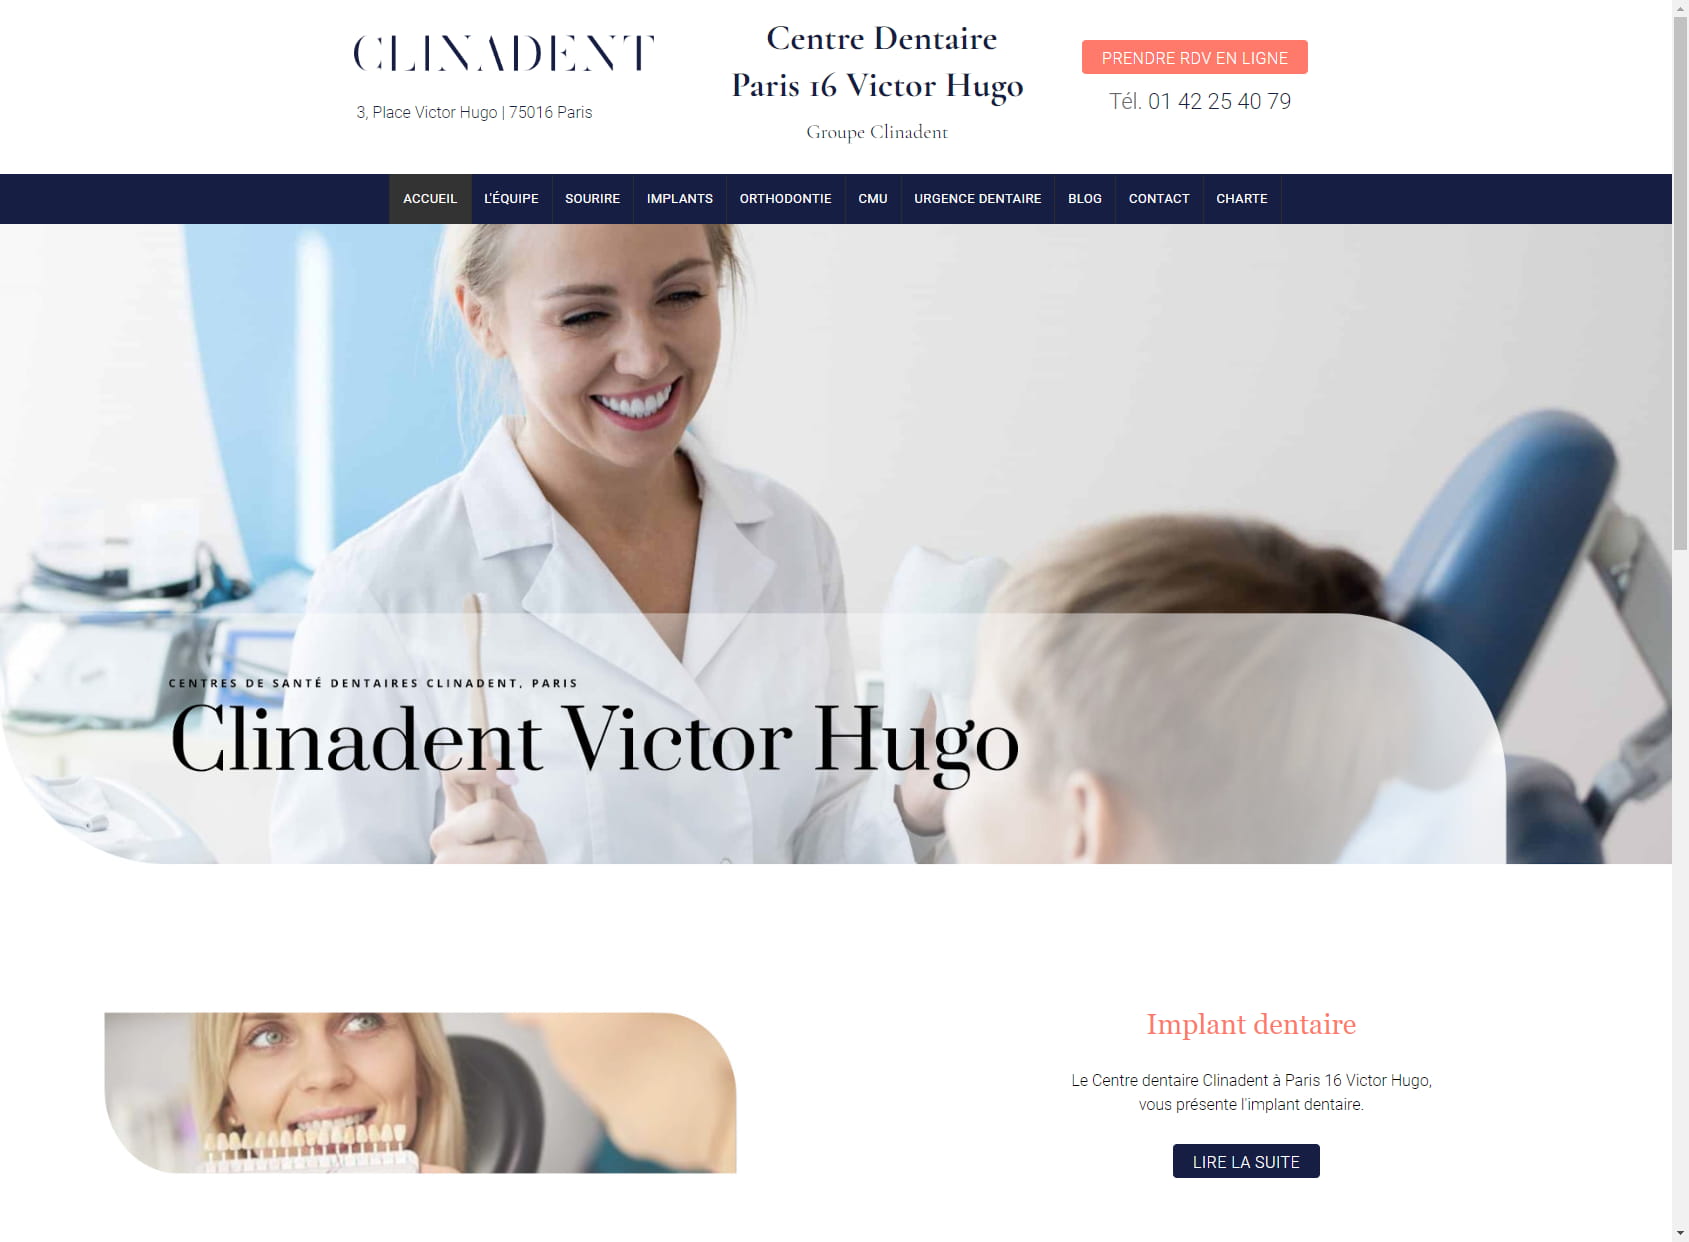 Dental Clinadent Paris Victor Hugo Center